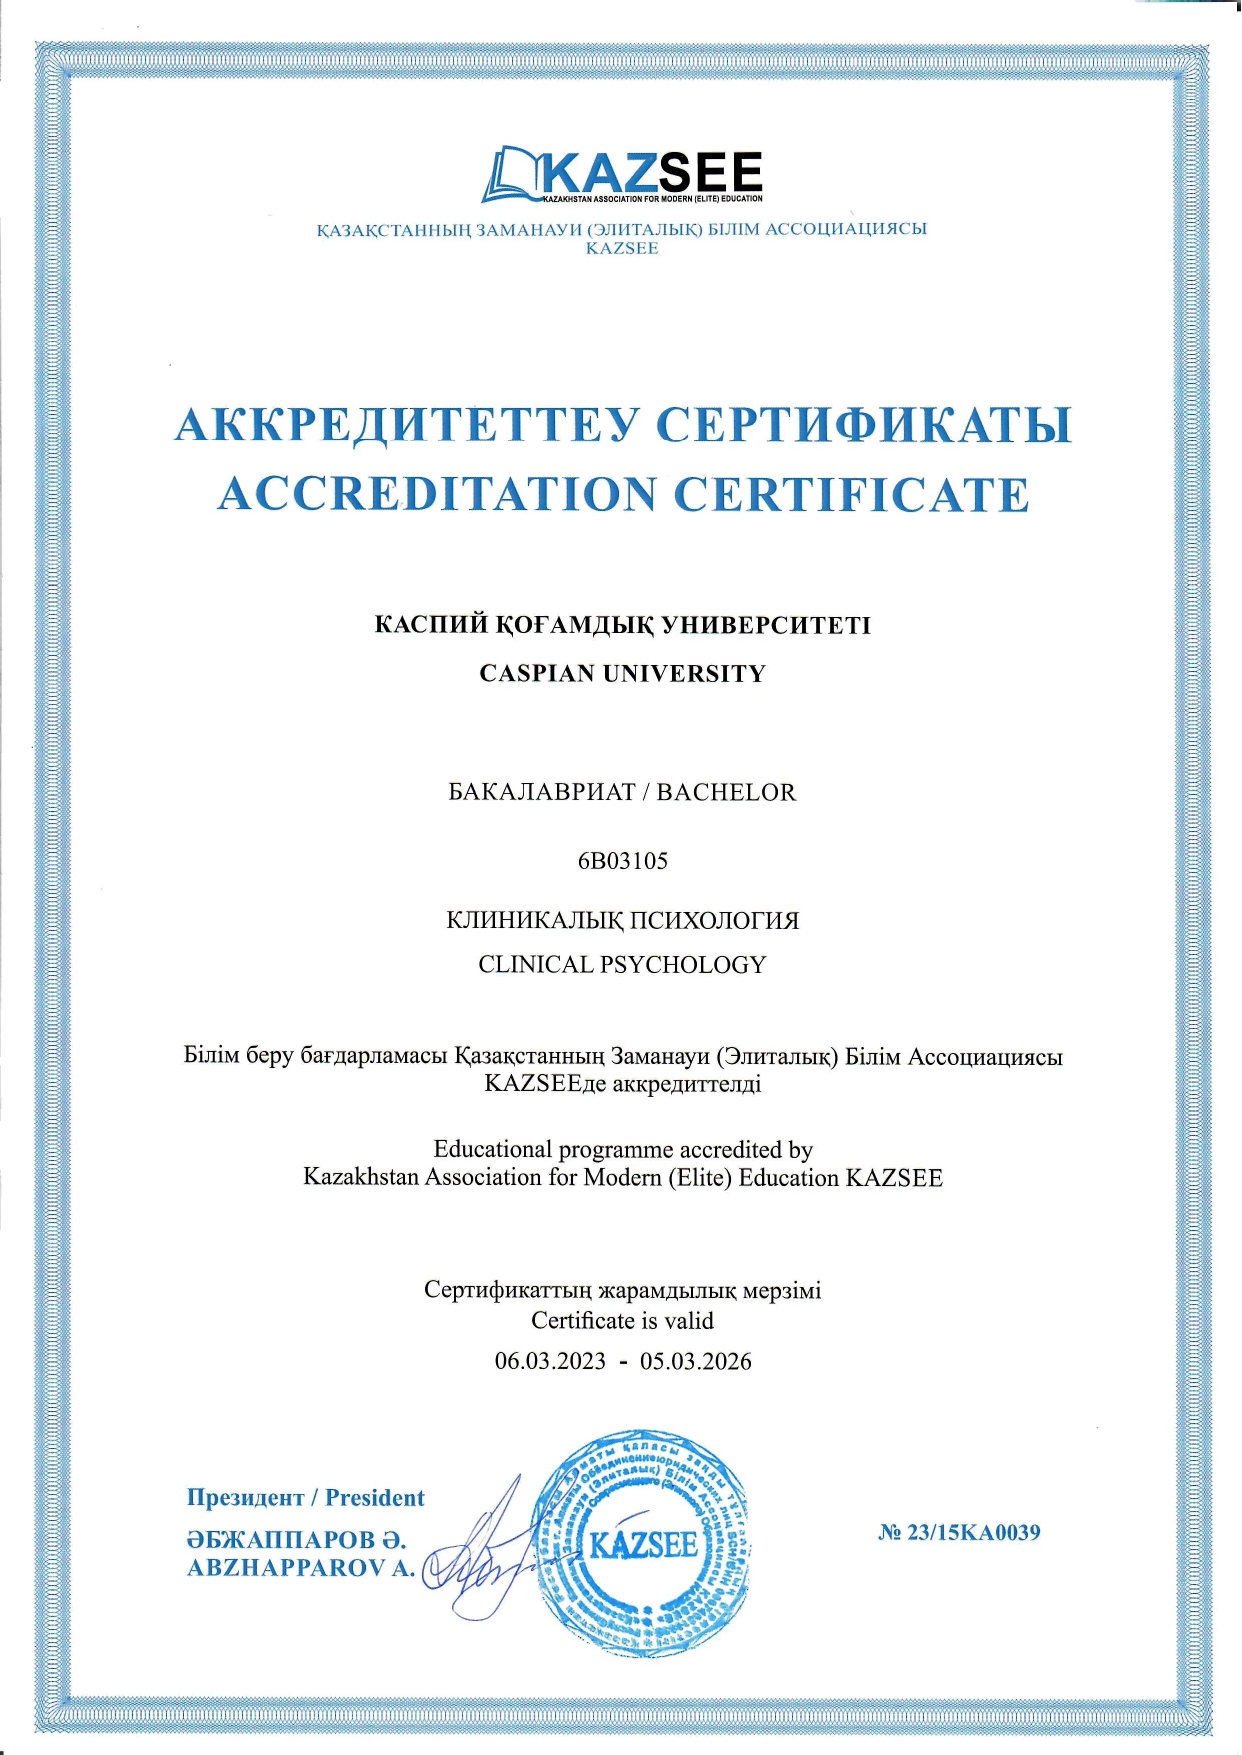 Certificate_Caspian university (1) (1)_page-0001